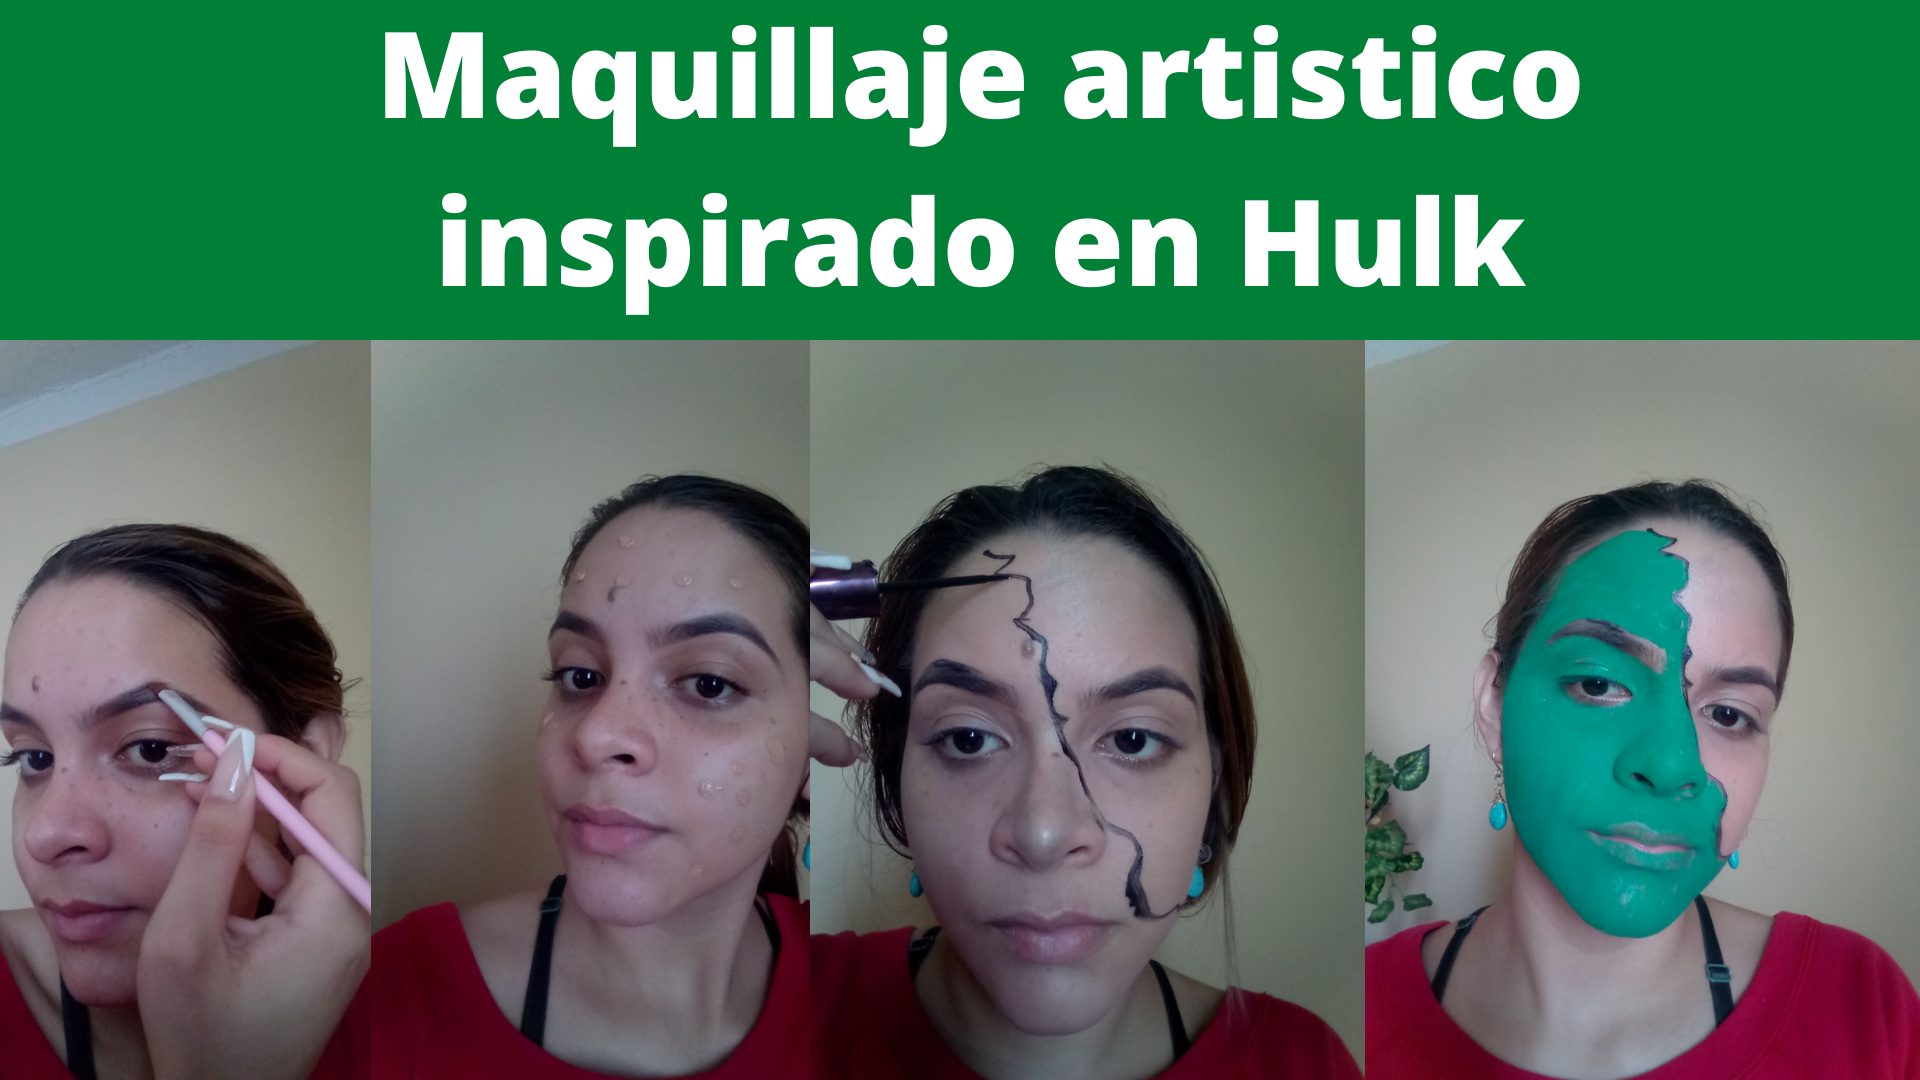 Maquillaje artistico inspirado en Hulk (1).png